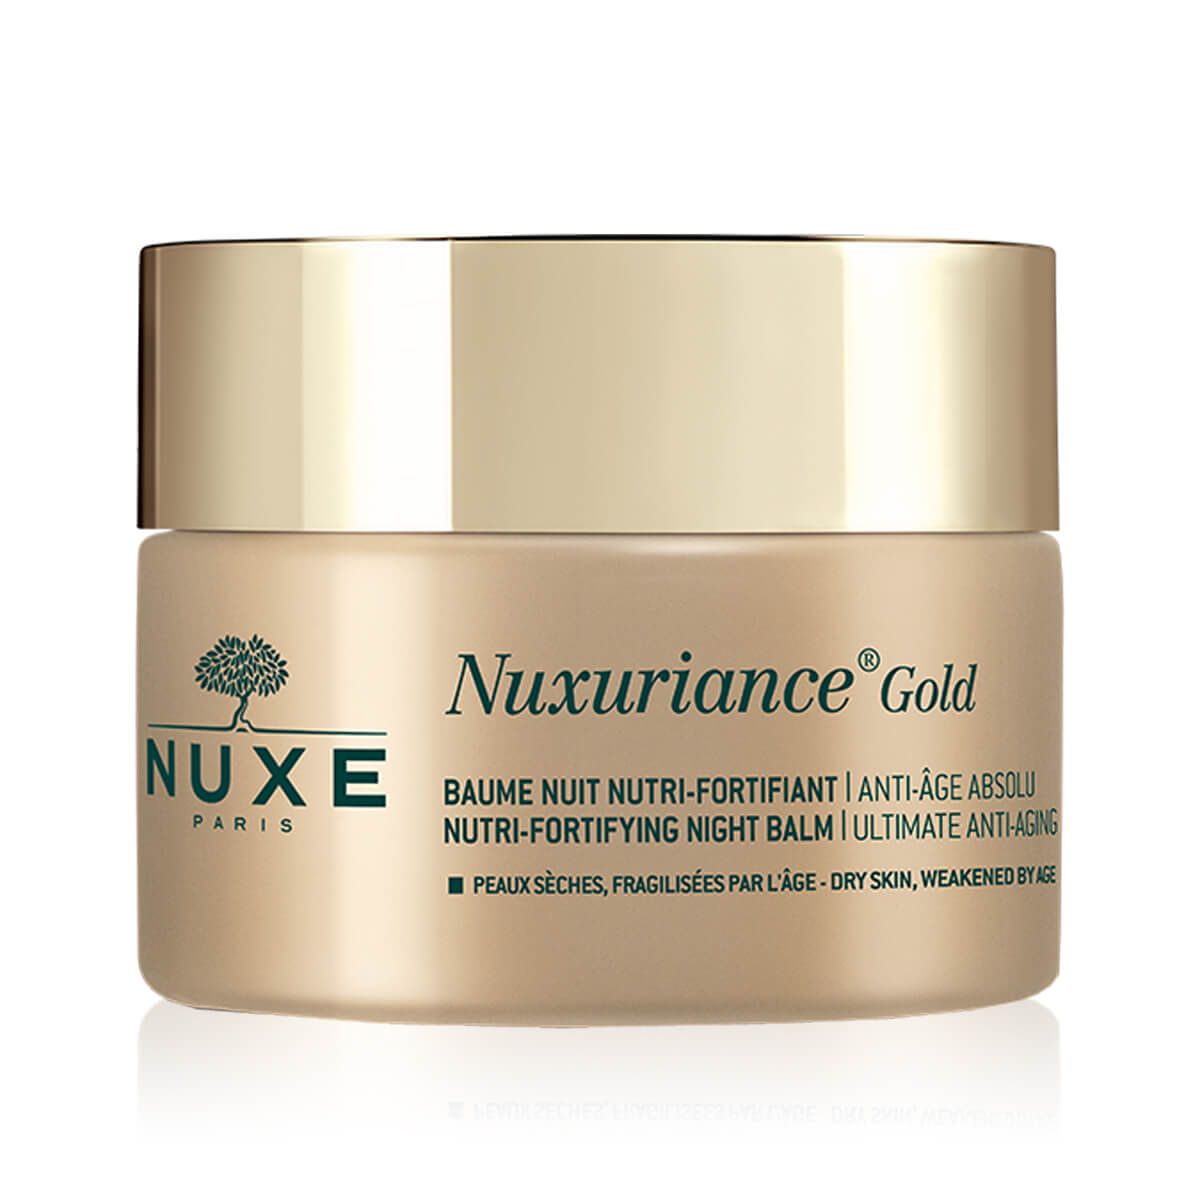 Nuxe Nuxuriance Gold - Crema notte Nutri-Fortificante anti età assoluto 50ml